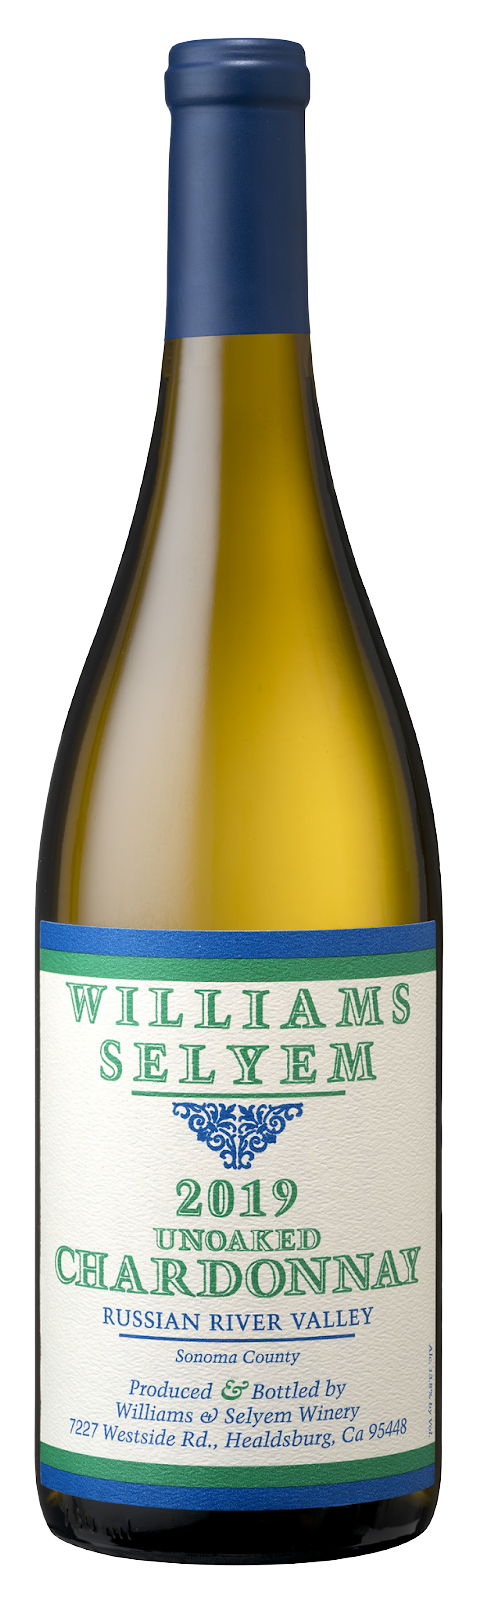 Williams Selyem Unoaked Chardonnay 2019